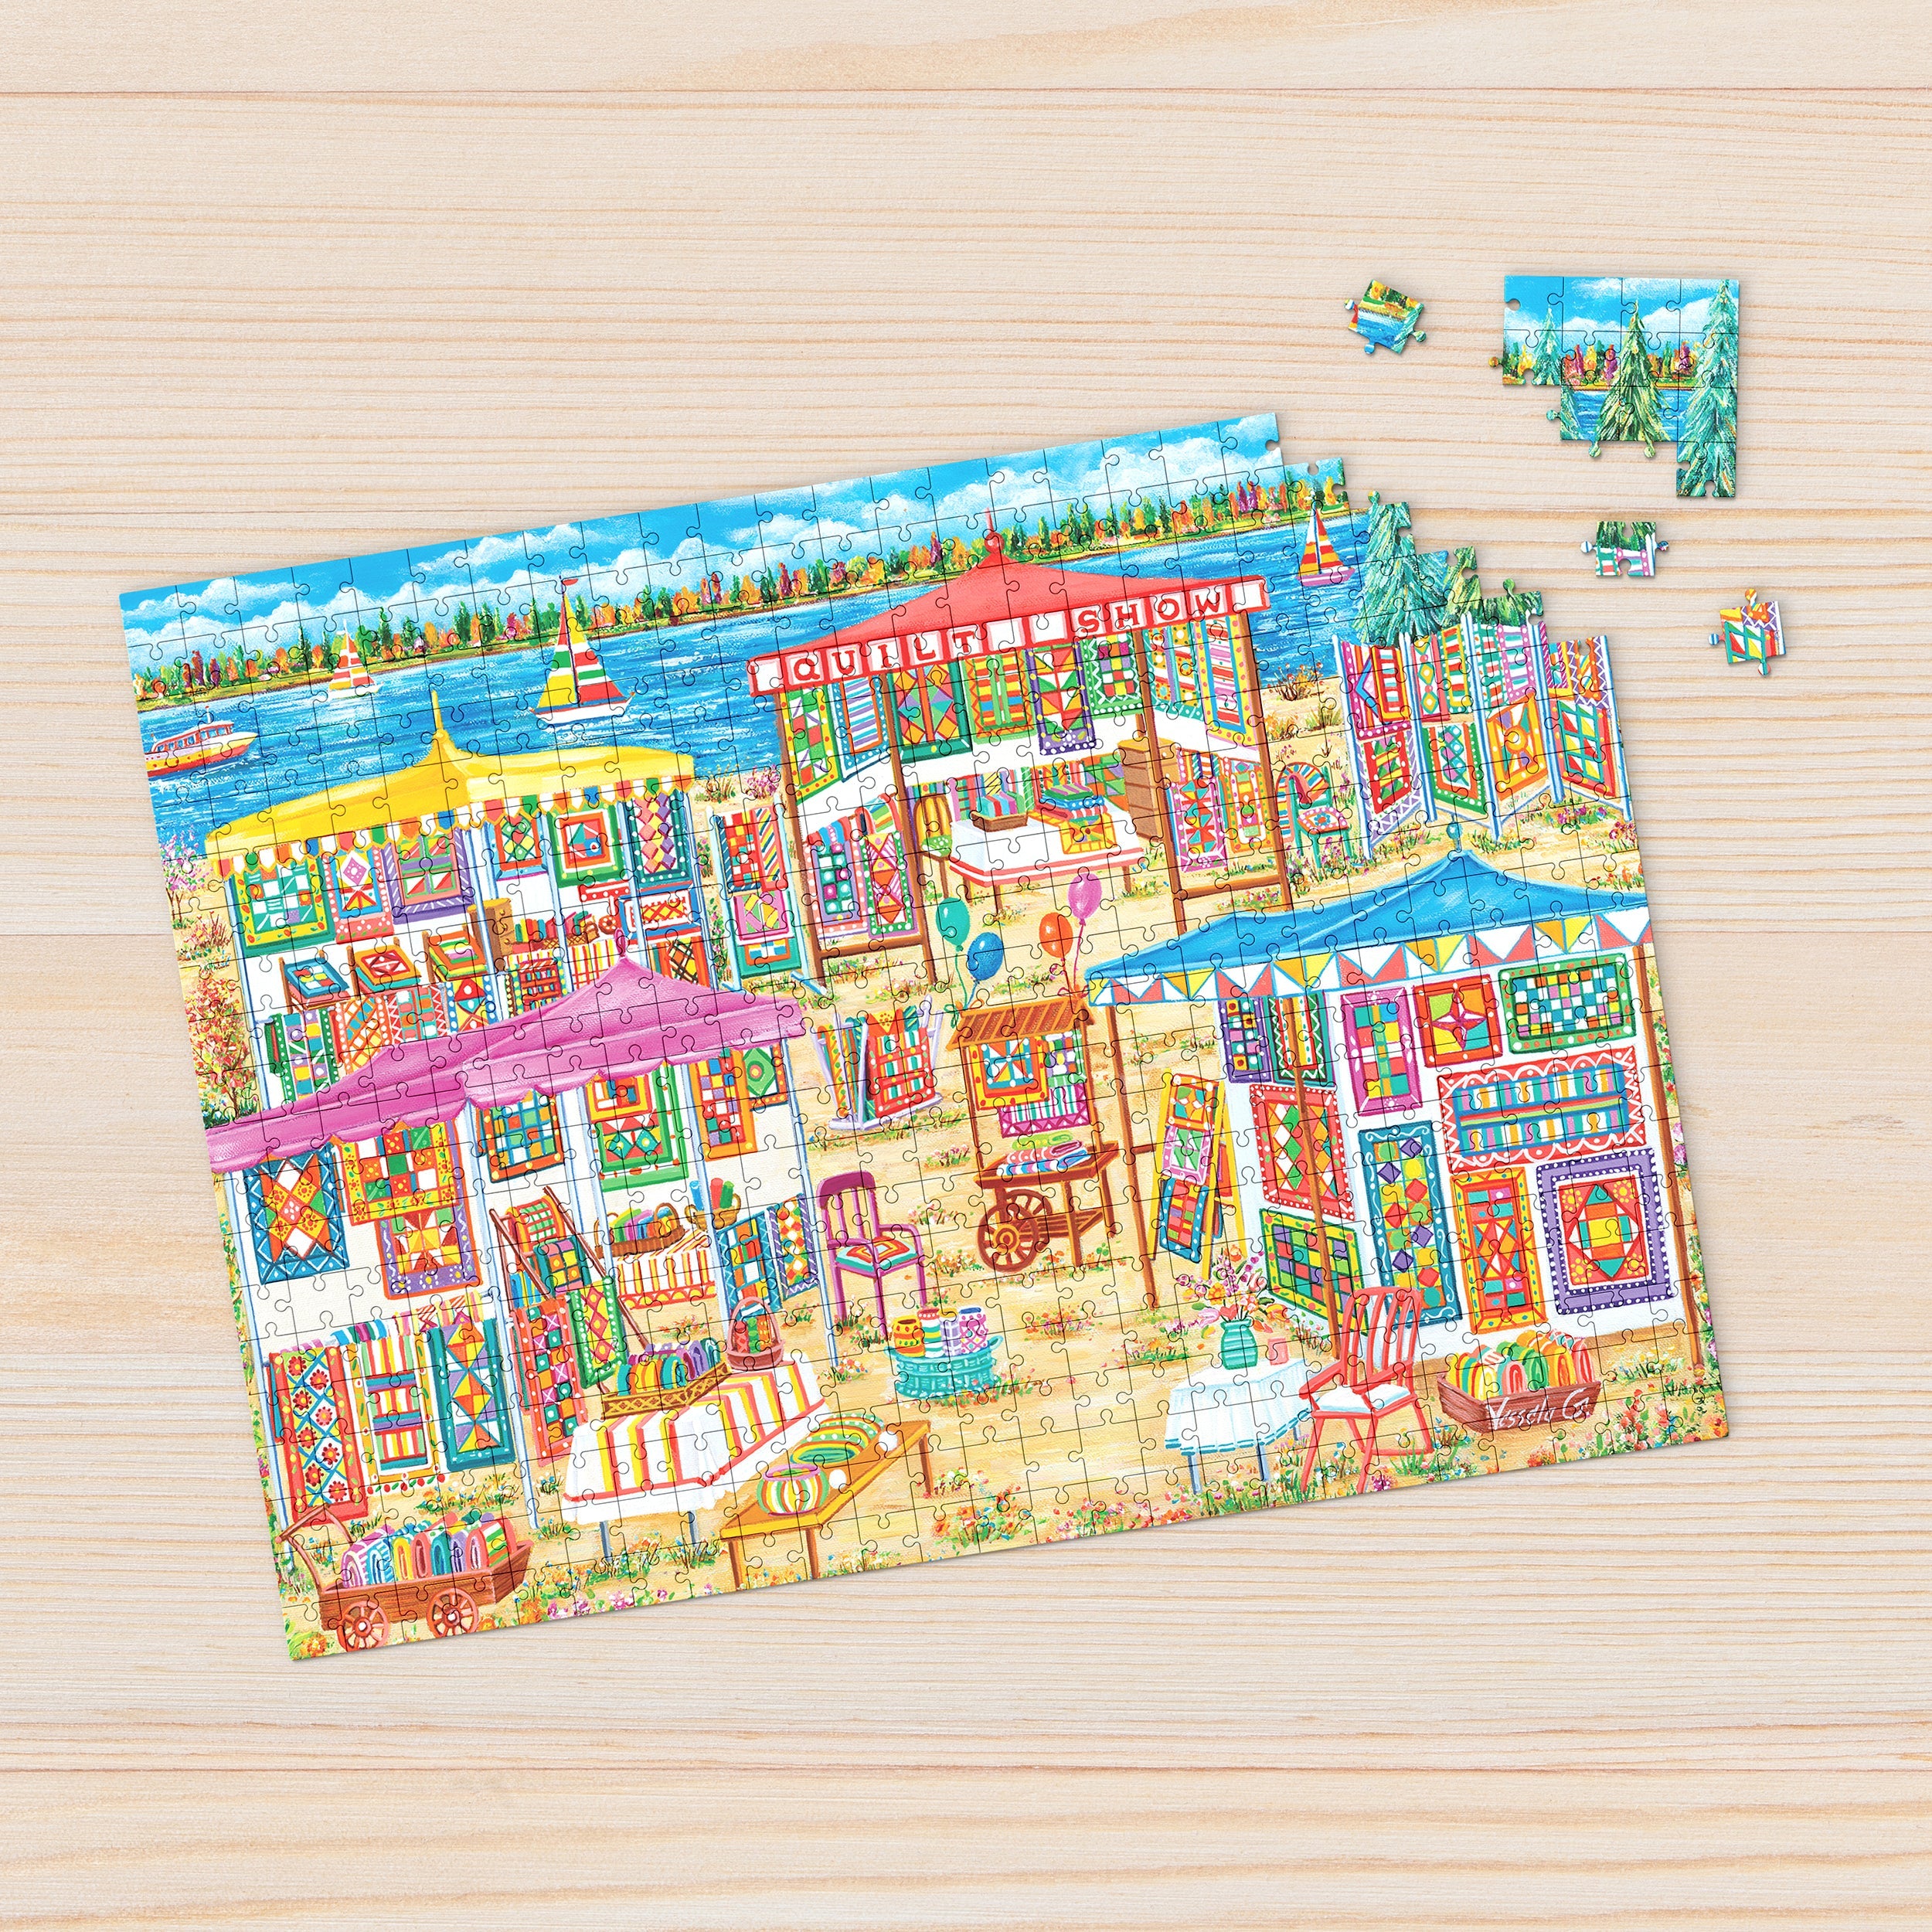 Beach Market 1000 Piece - Jigsaw Puzzle